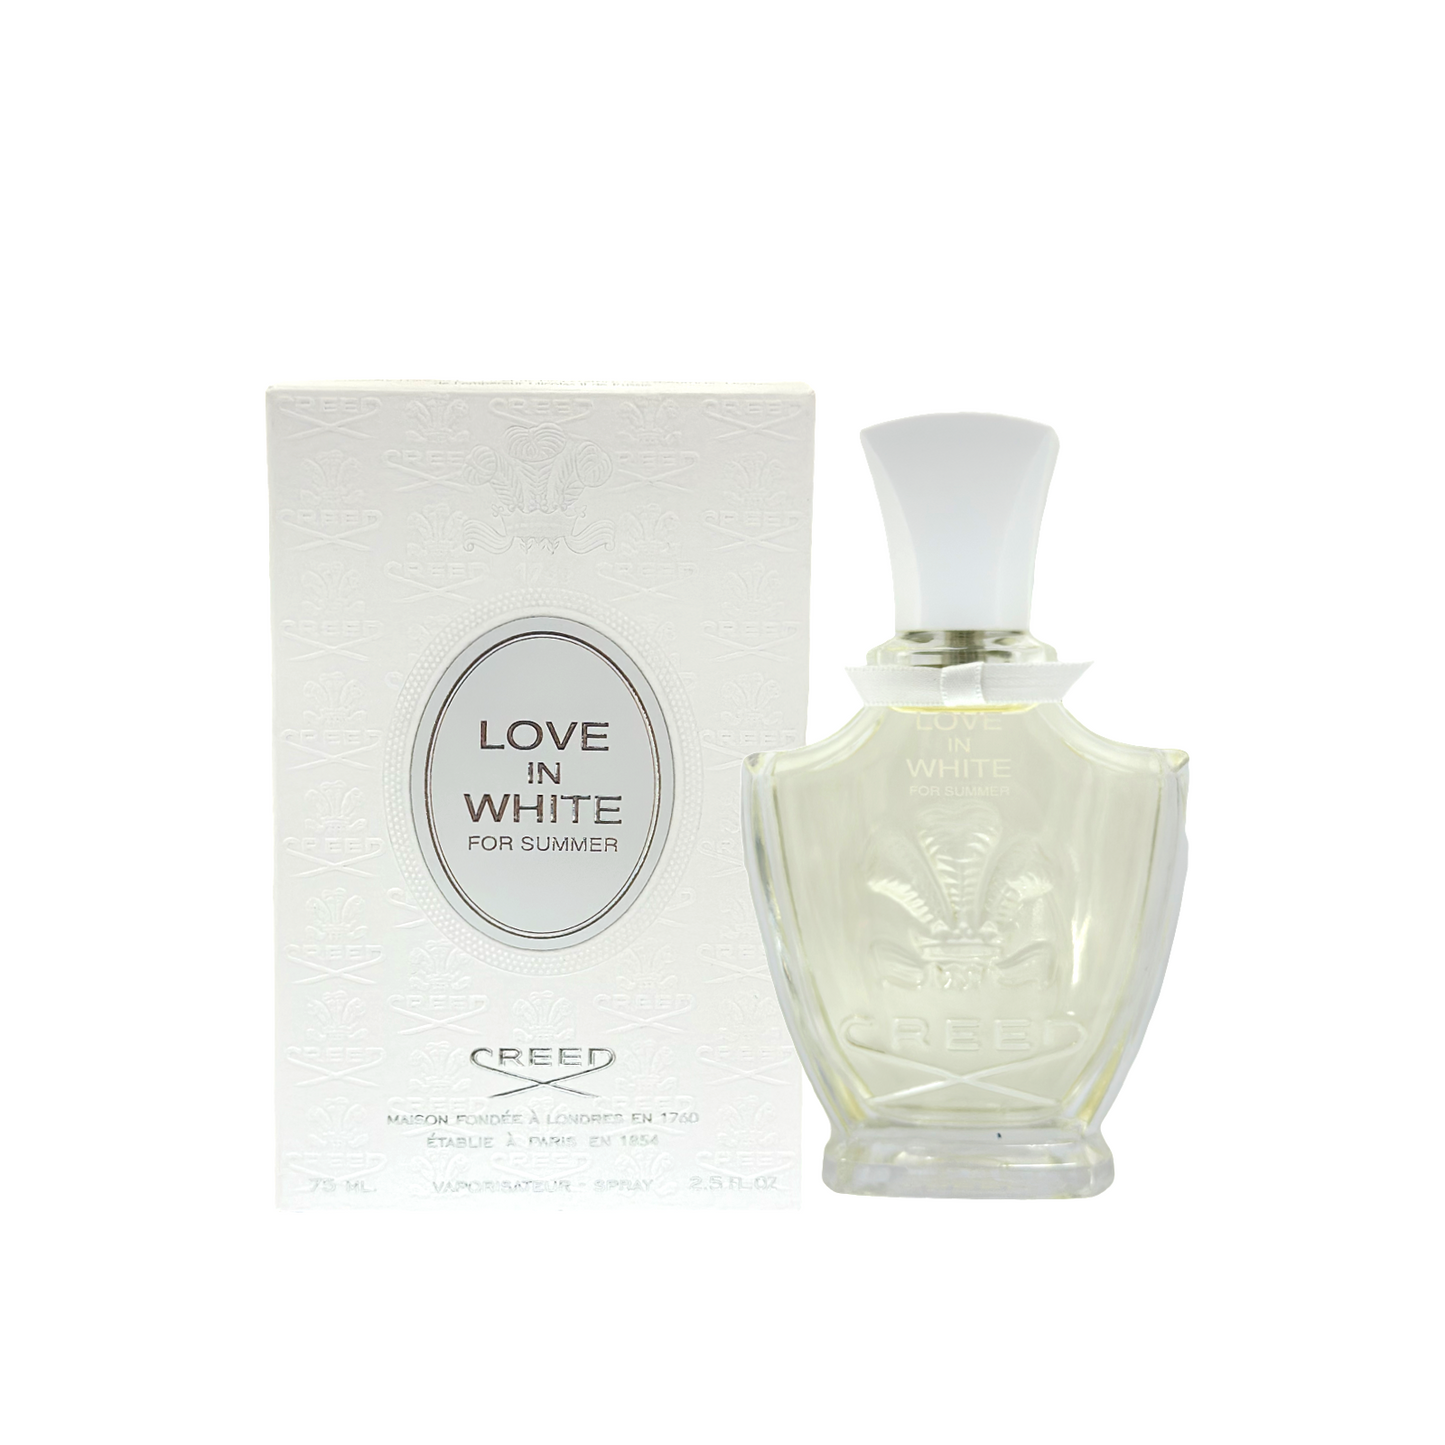 Creed Love in White for Summer 2.5oz Eau de Parfum